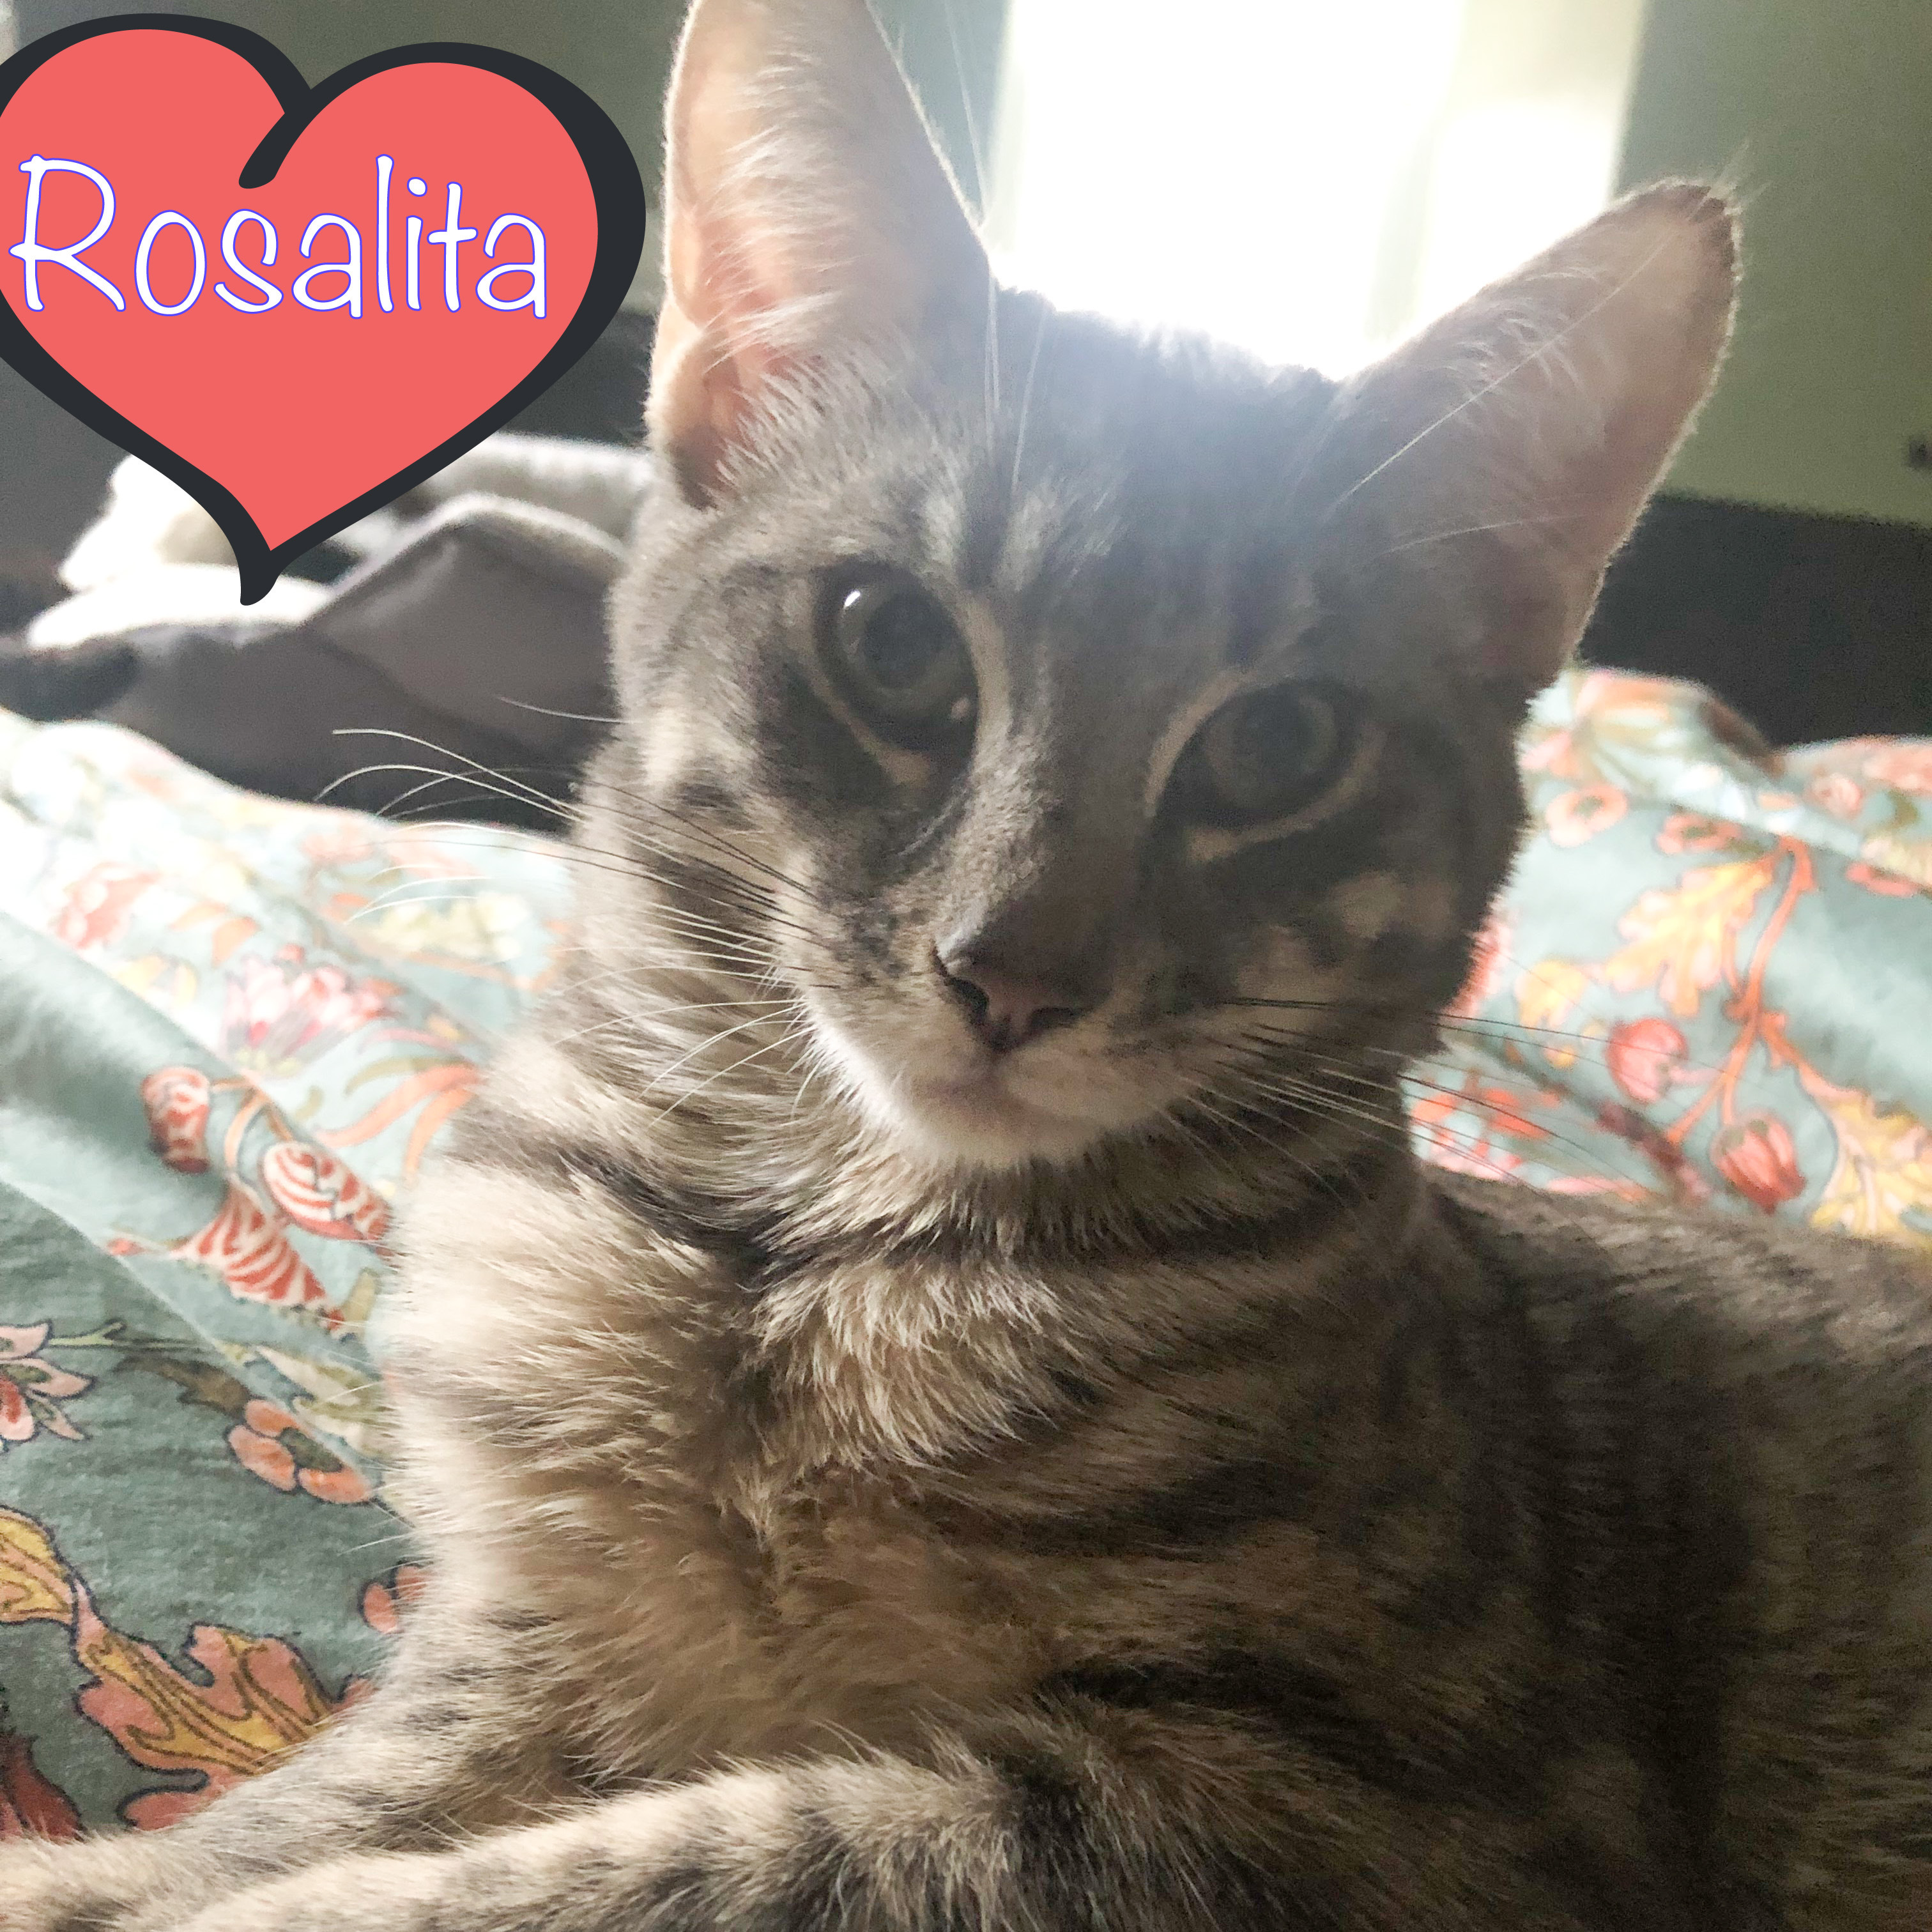 Rosalita detail page